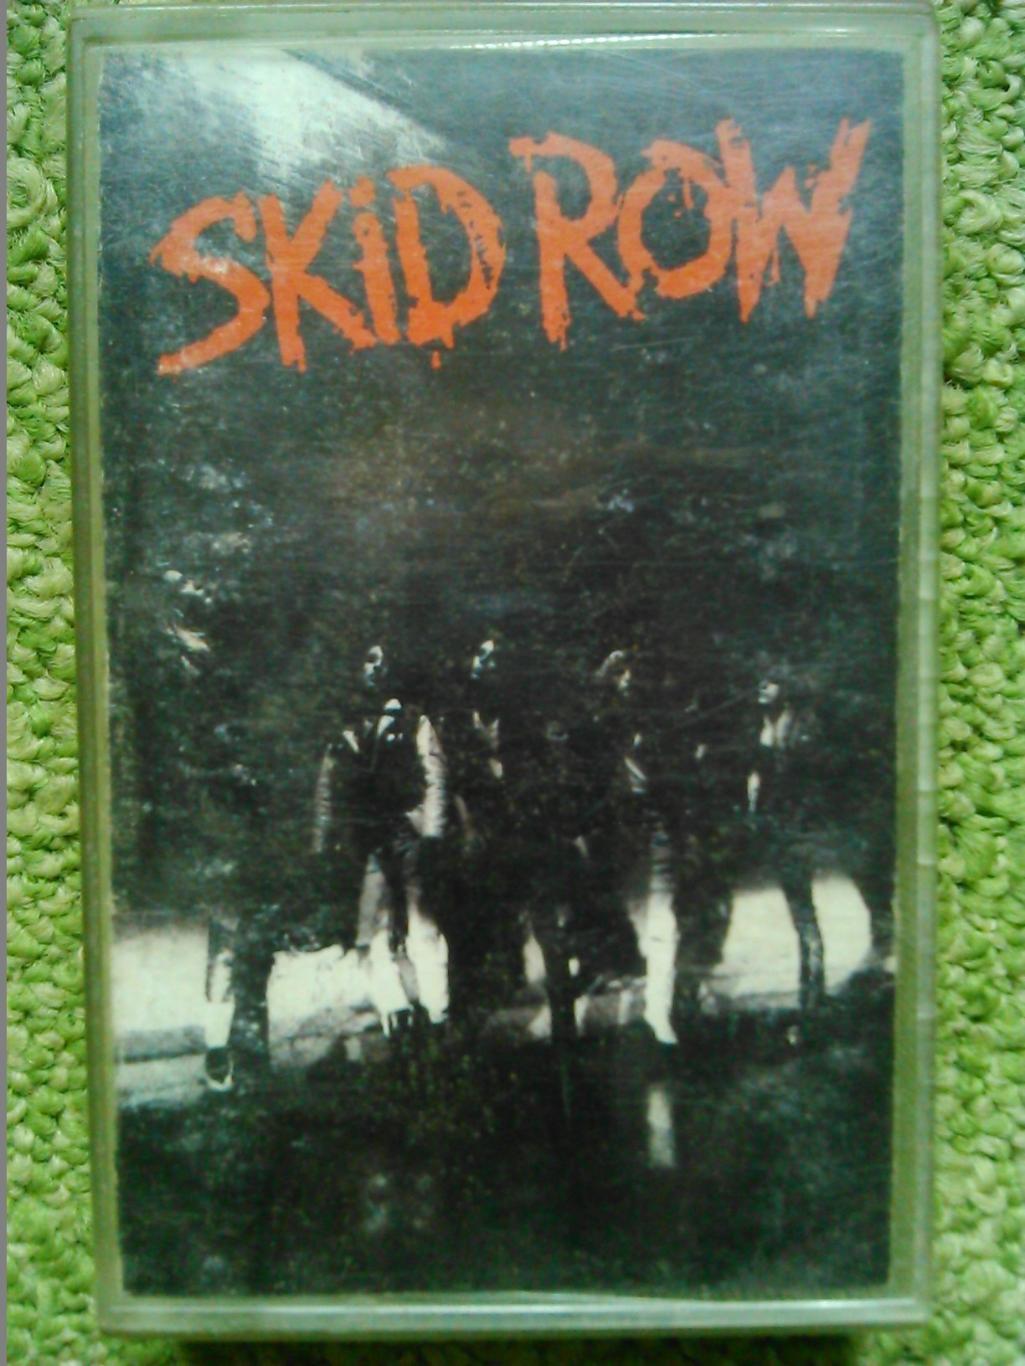 MC/аудиокассета SKID ROW 1989 фирменная USA. Оптом скидки до 50%!